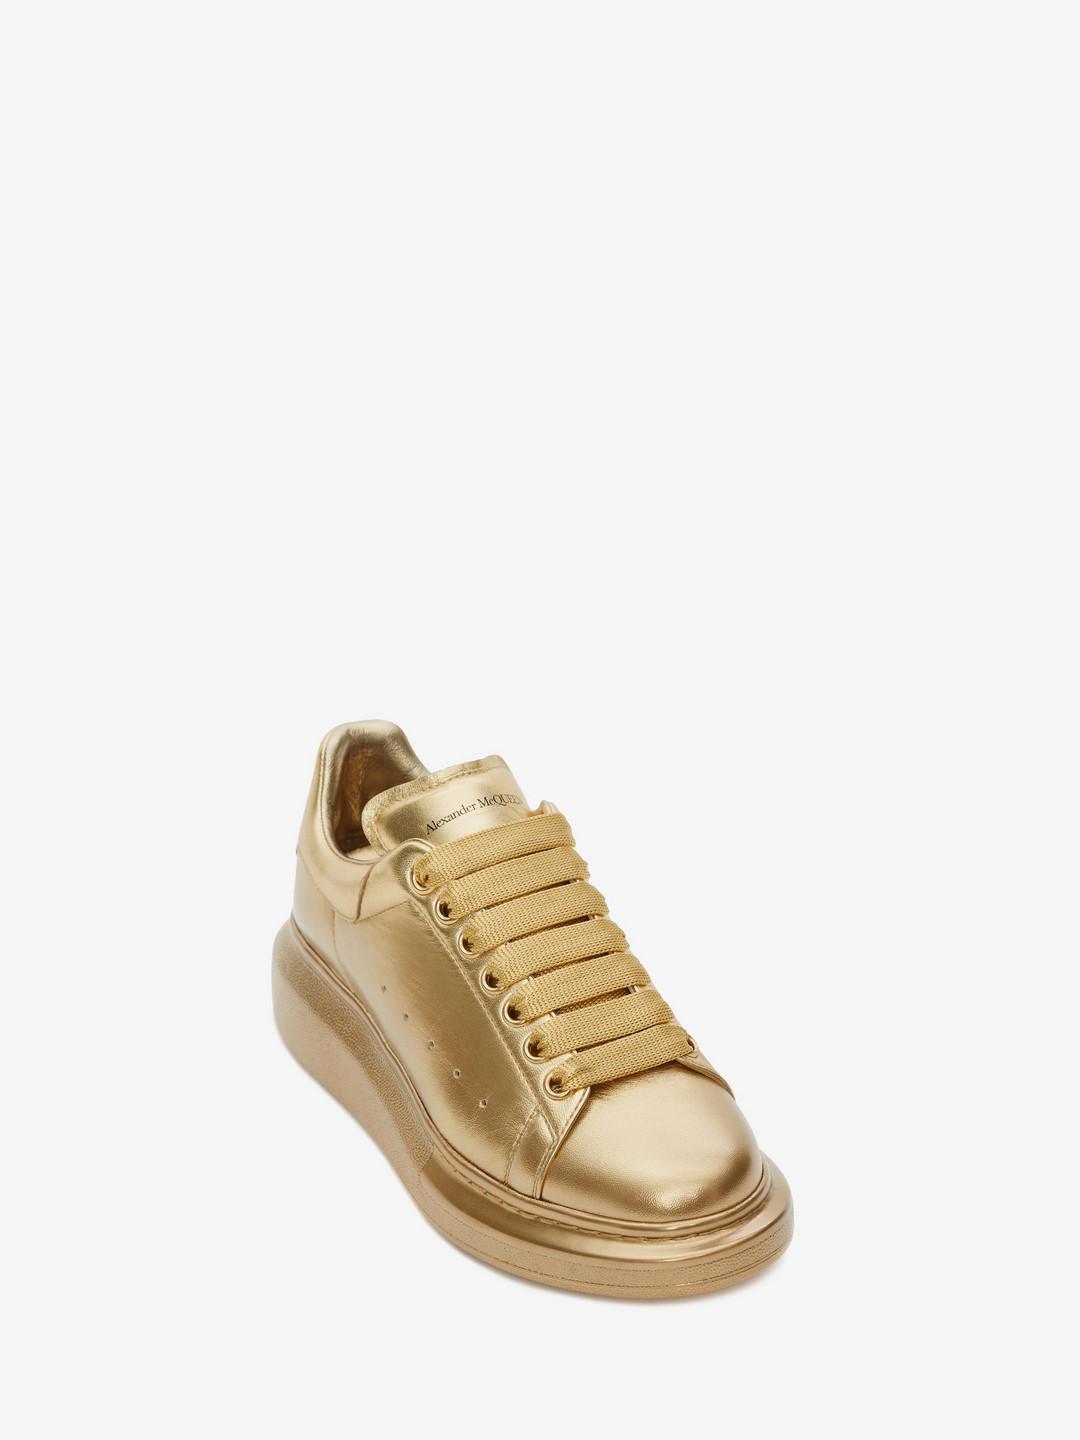 Alexander McQueen Leather Oversized Sneaker in Gold (Metallic) - Lyst